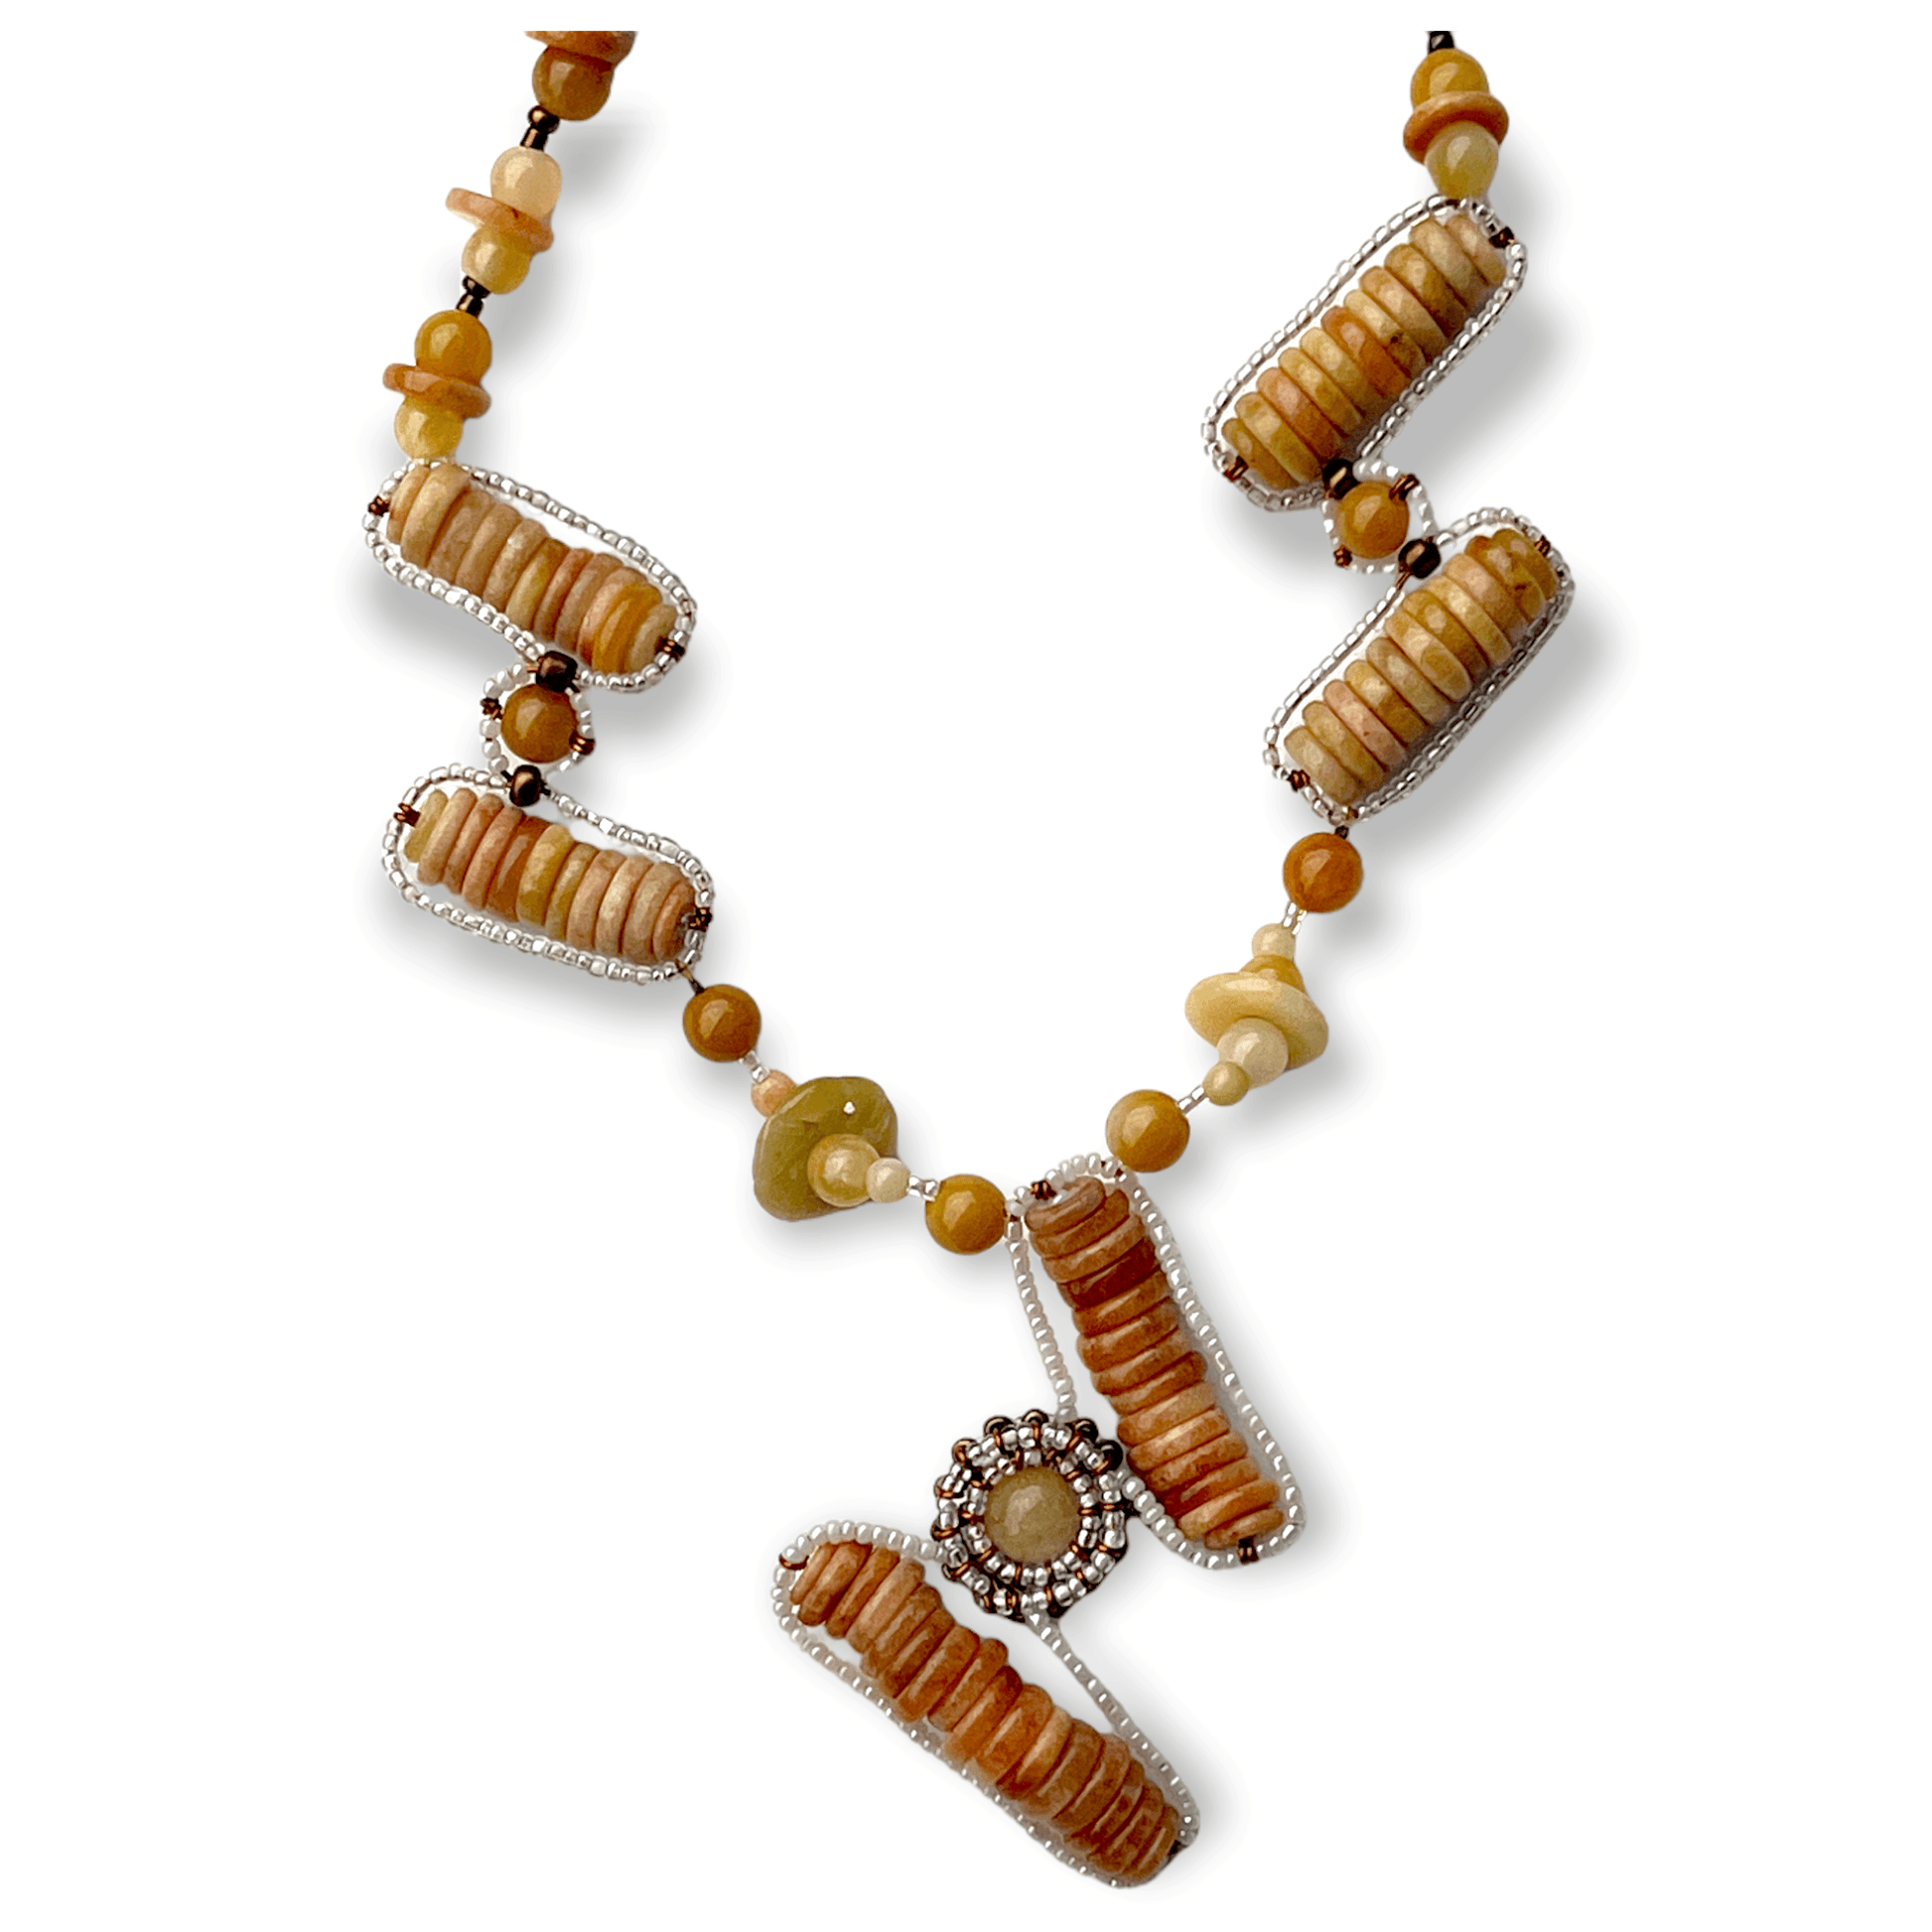 Step function amber necklace in earth tones - Sundara Joon